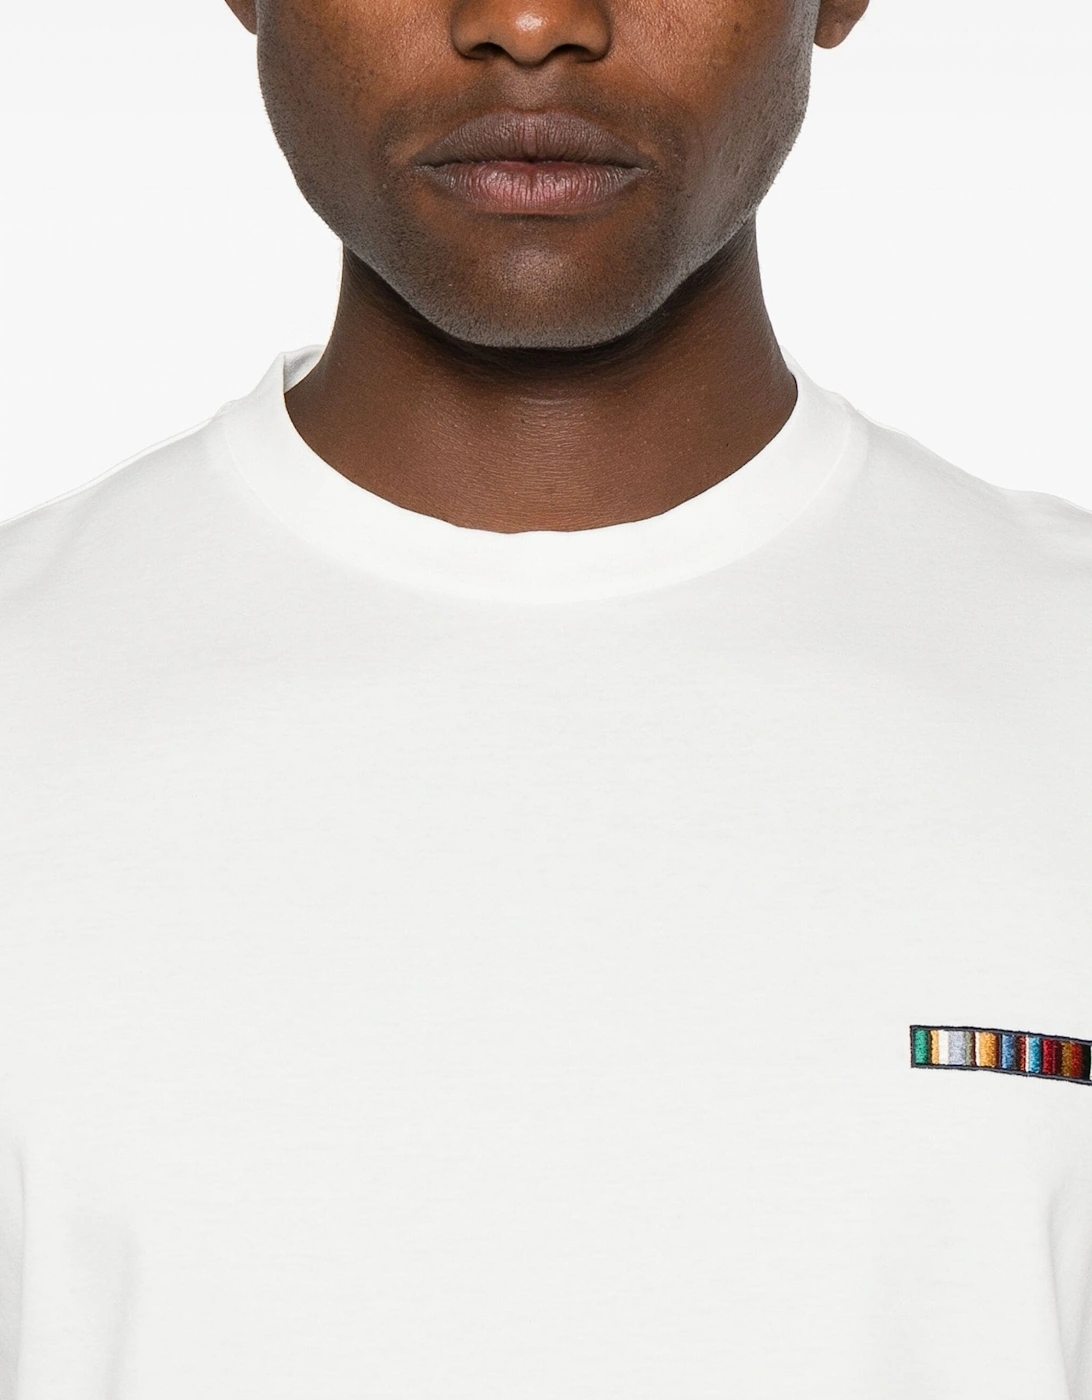 Multi Stripe Embroidery T-shirt White